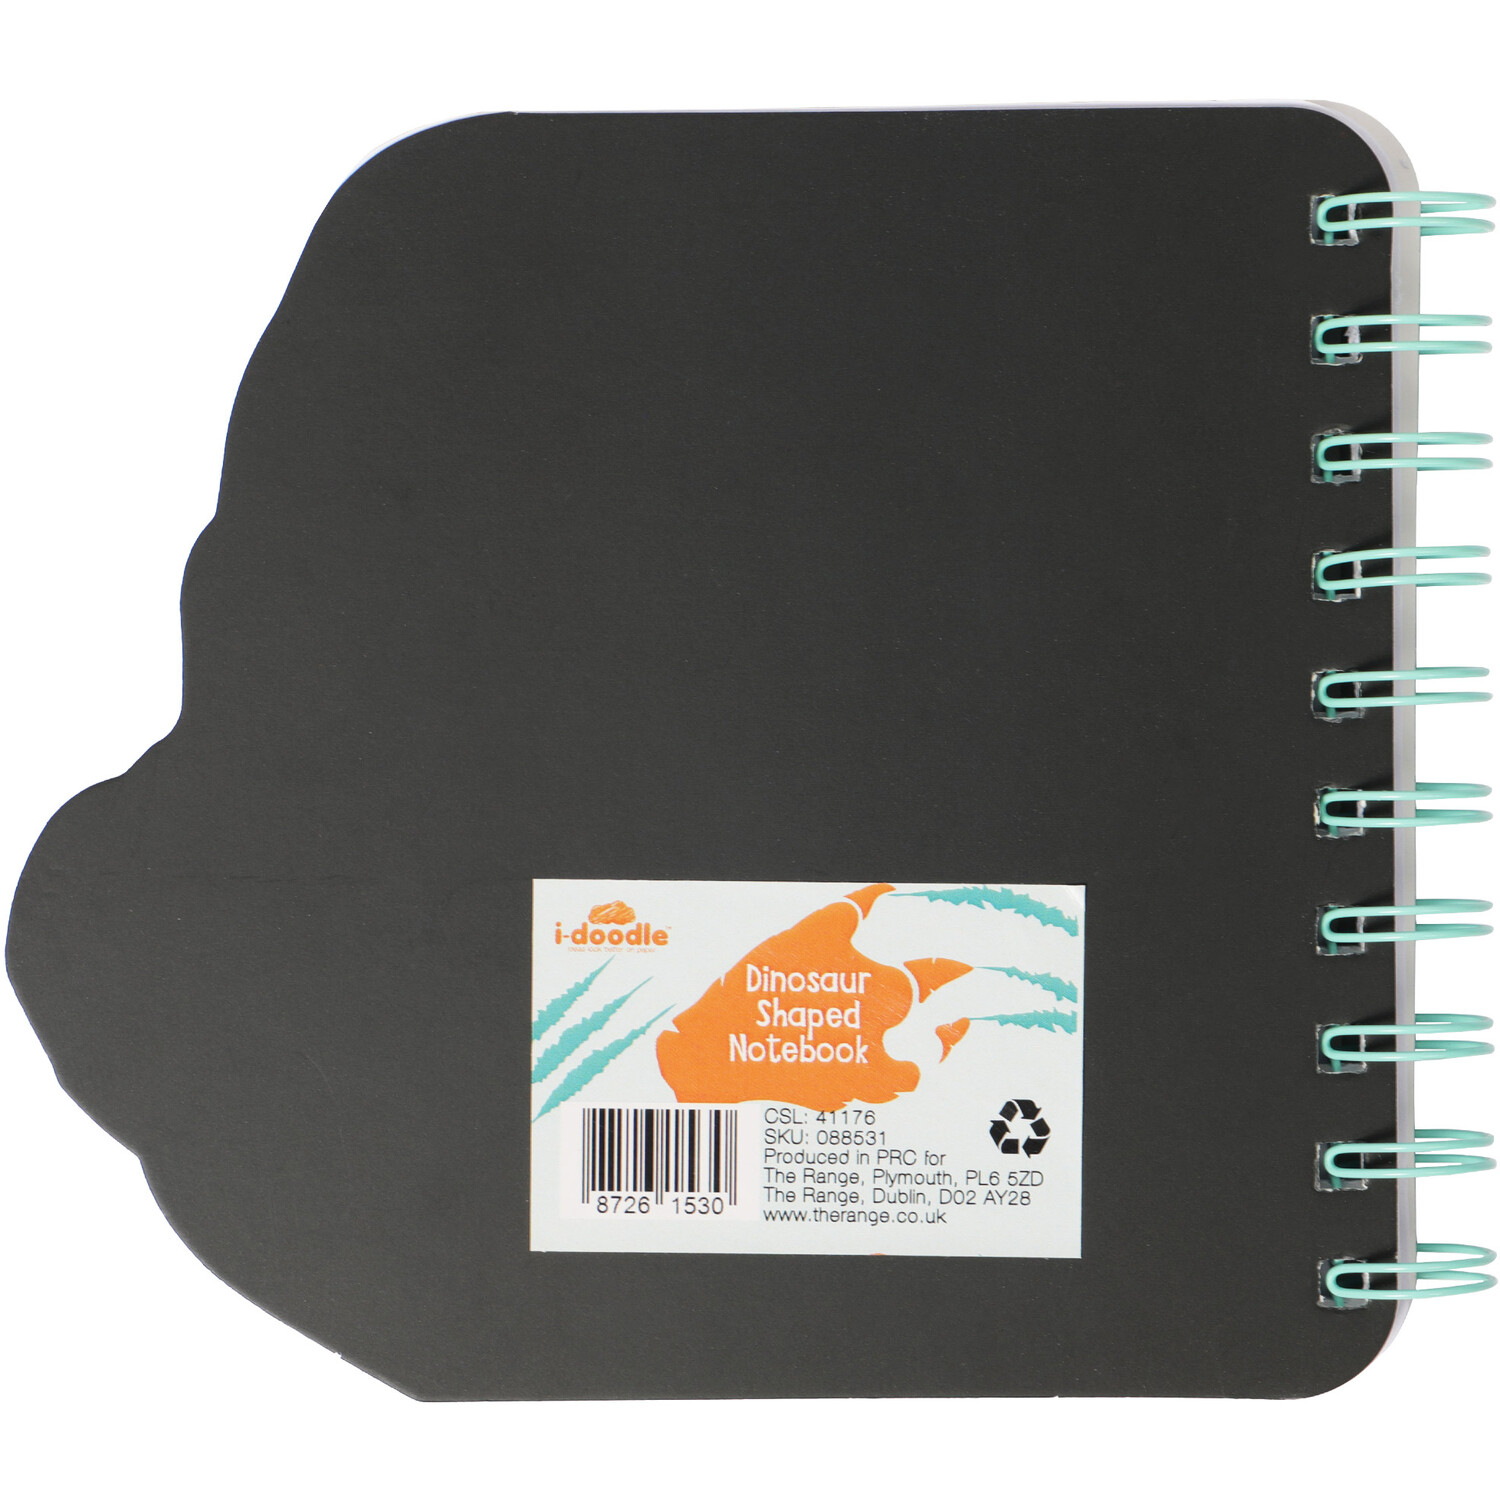 Dinosaur Shaped Notebook - Black Image 2